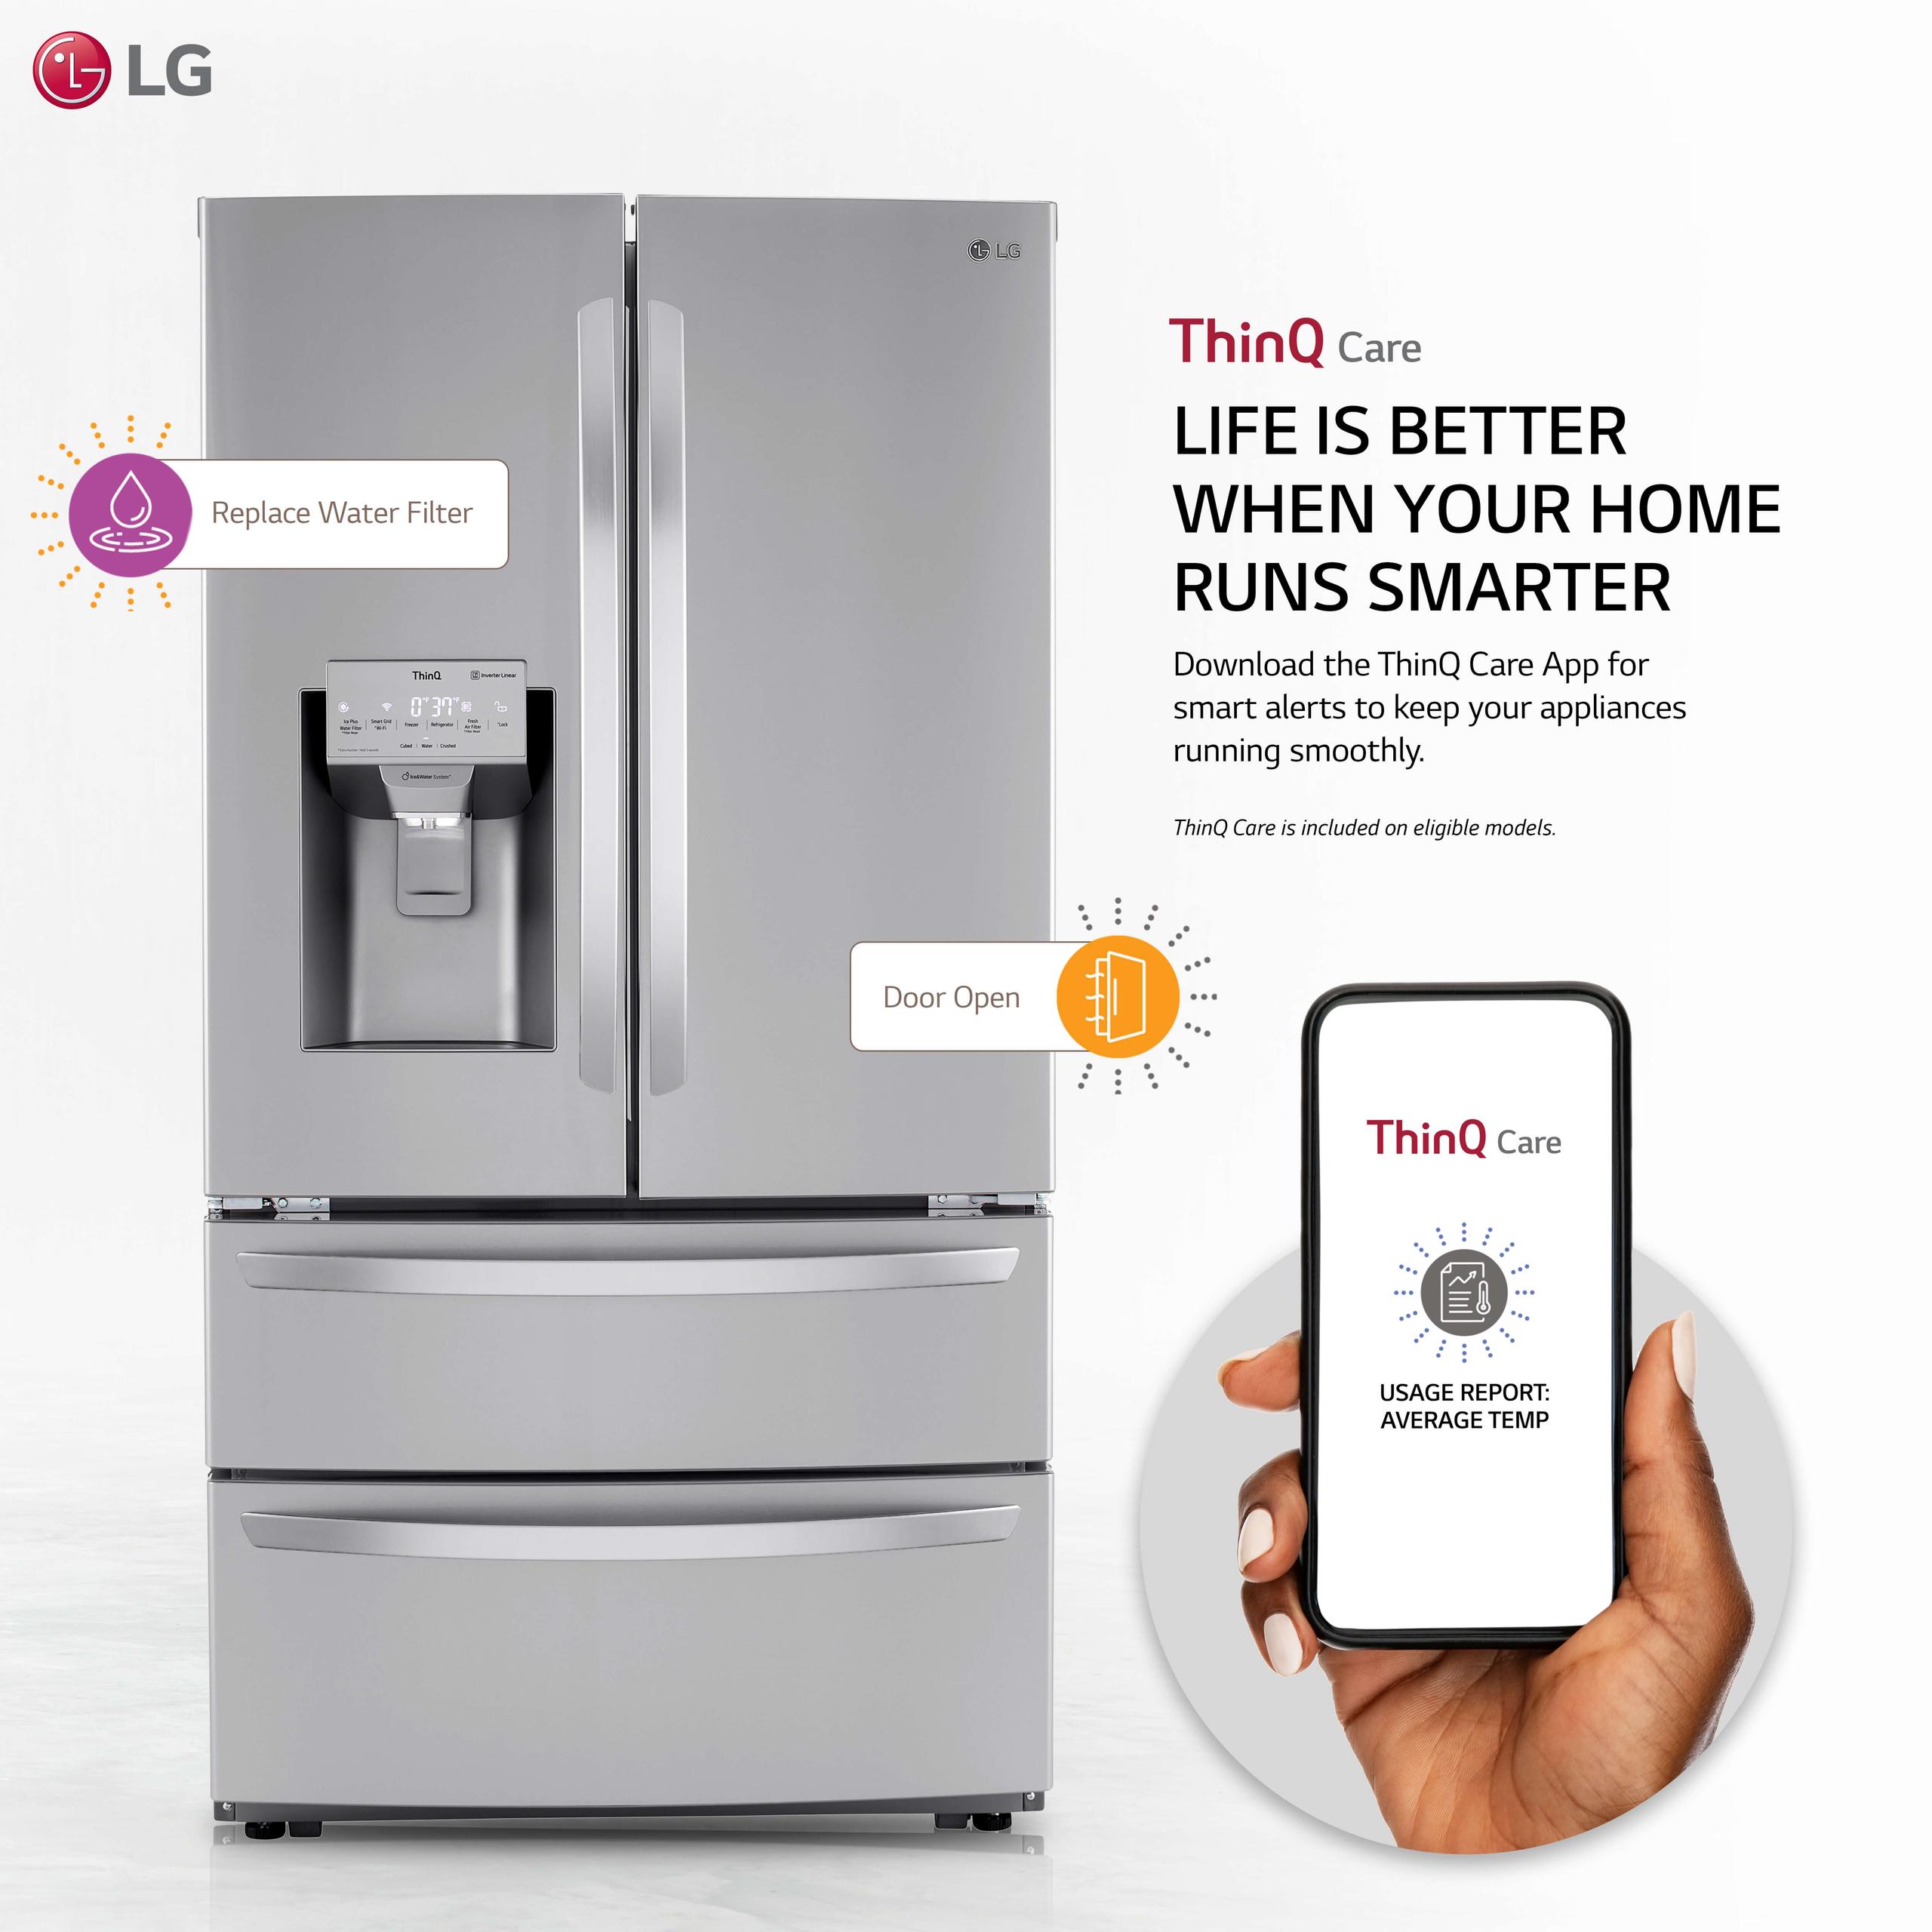 28 cu ft. Smart Double Freezer Refrigerator with Craft Ice™